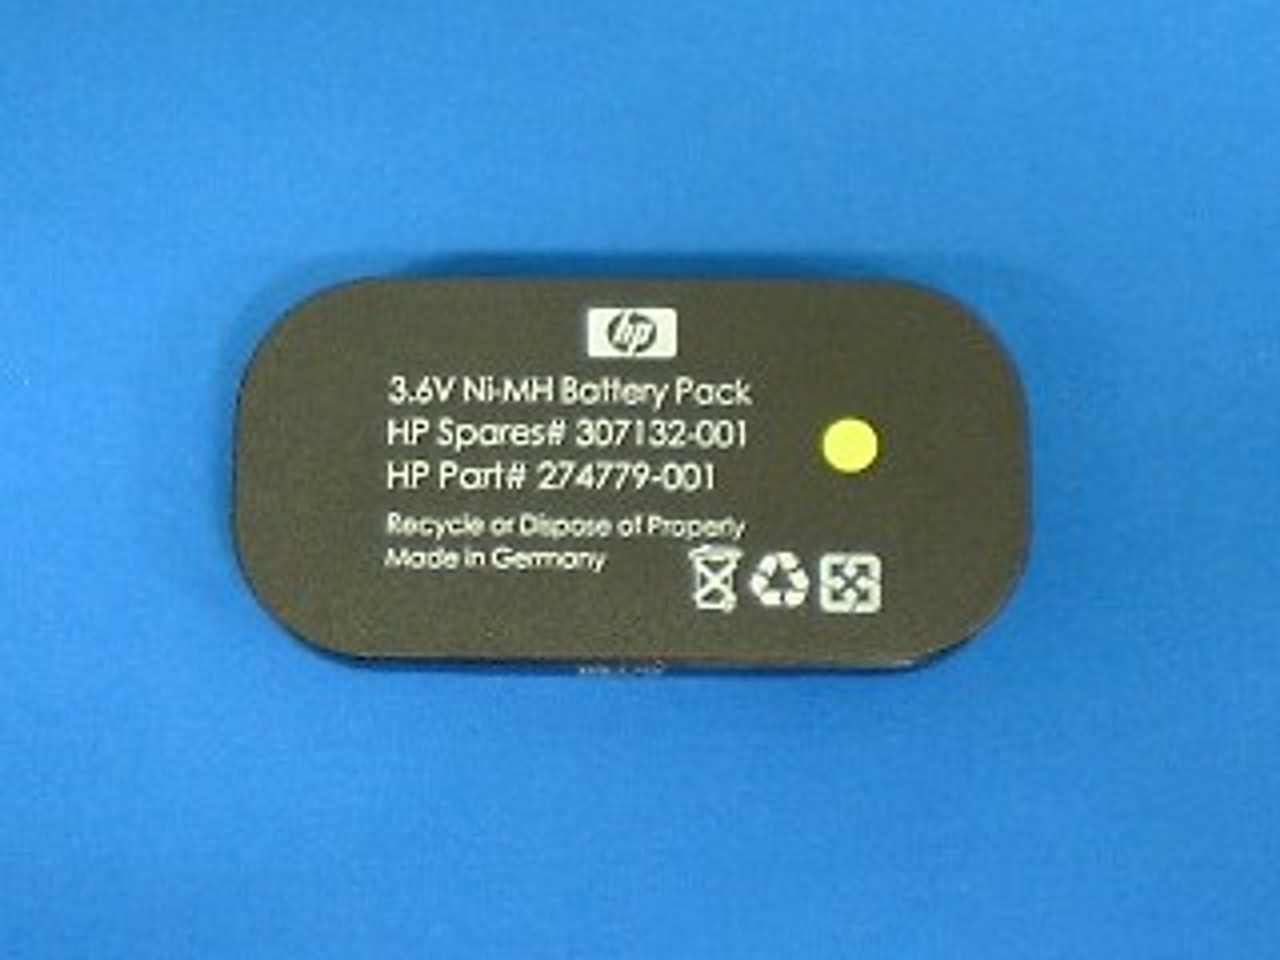 HP ProLiant DL380 G4 3.6V Ni-MH Battery Pack // 307132-001 